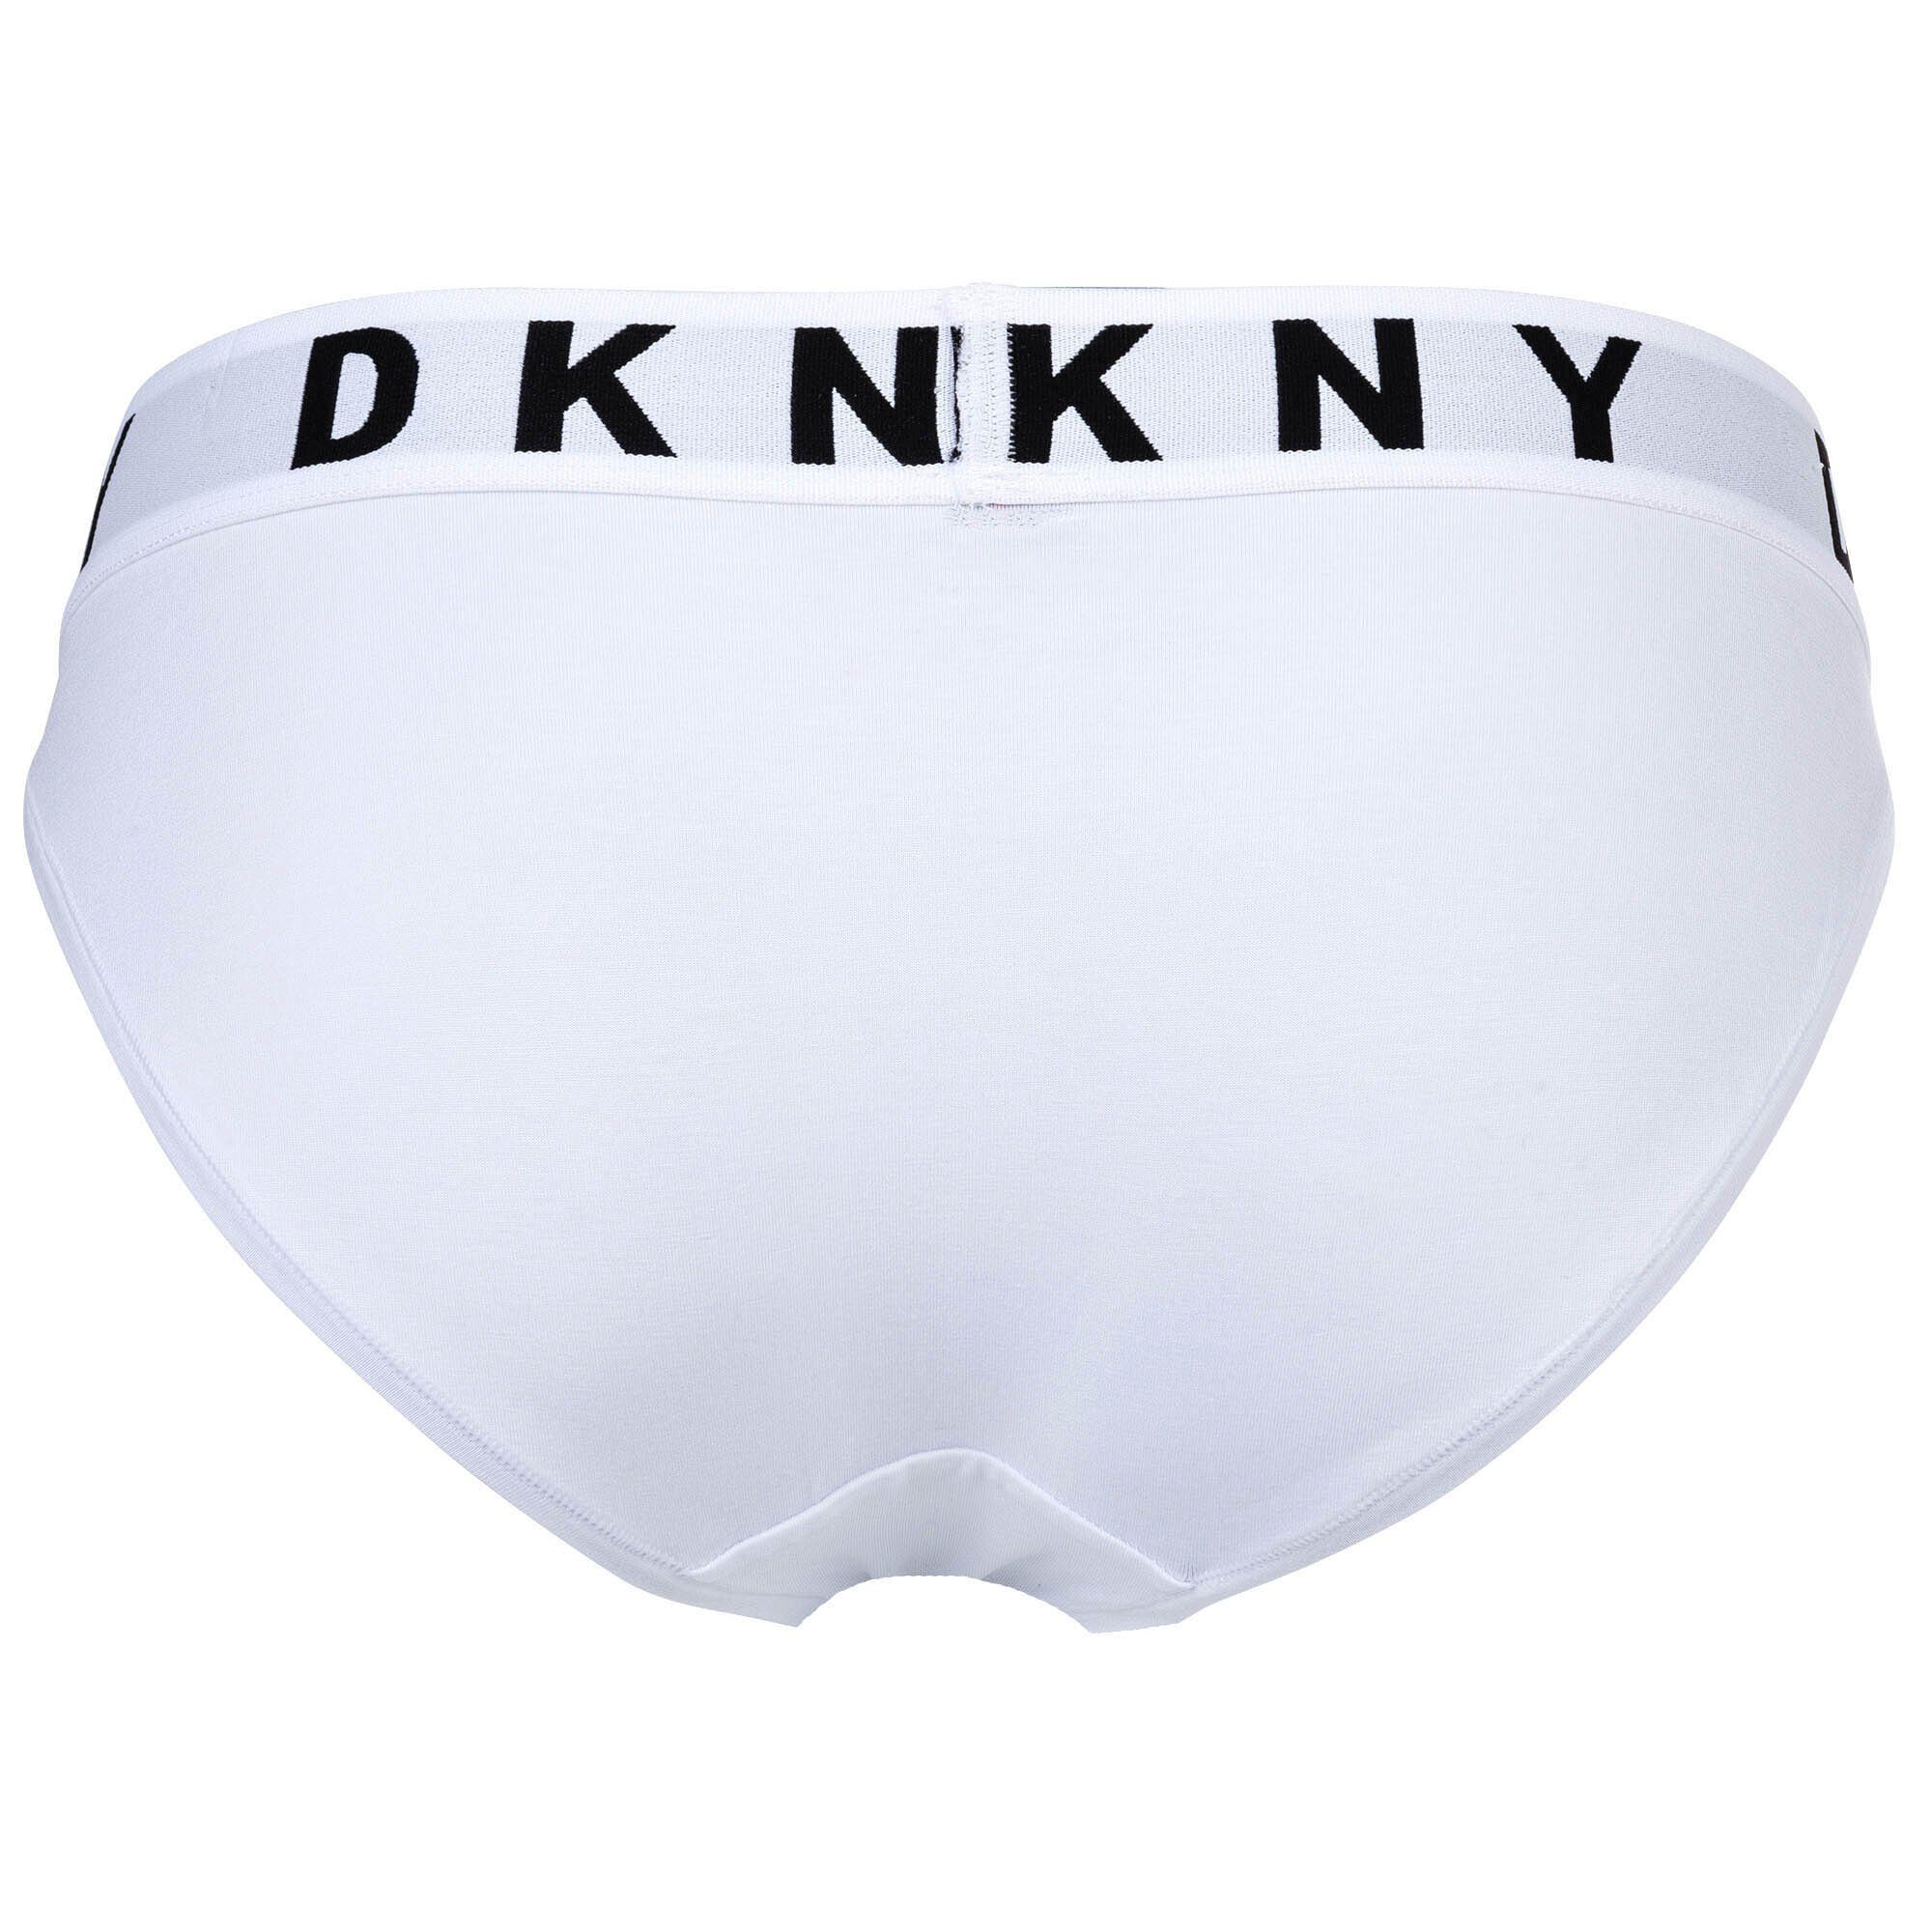 Slip - Brief, Weiß DKNY Panty Cotton Modal Stretch Damen